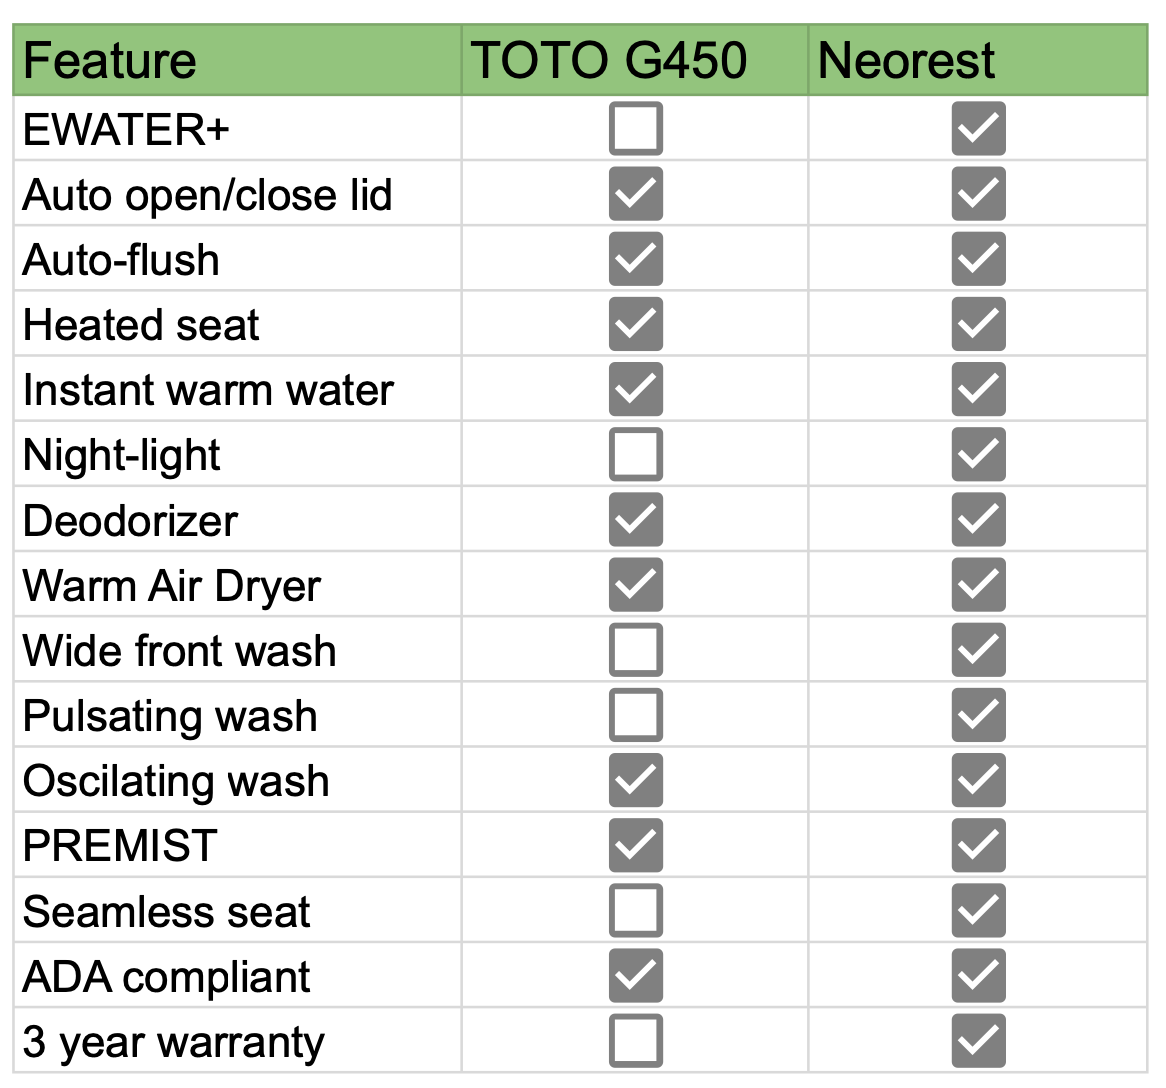 toto g450 vs neorest feature comparison chart